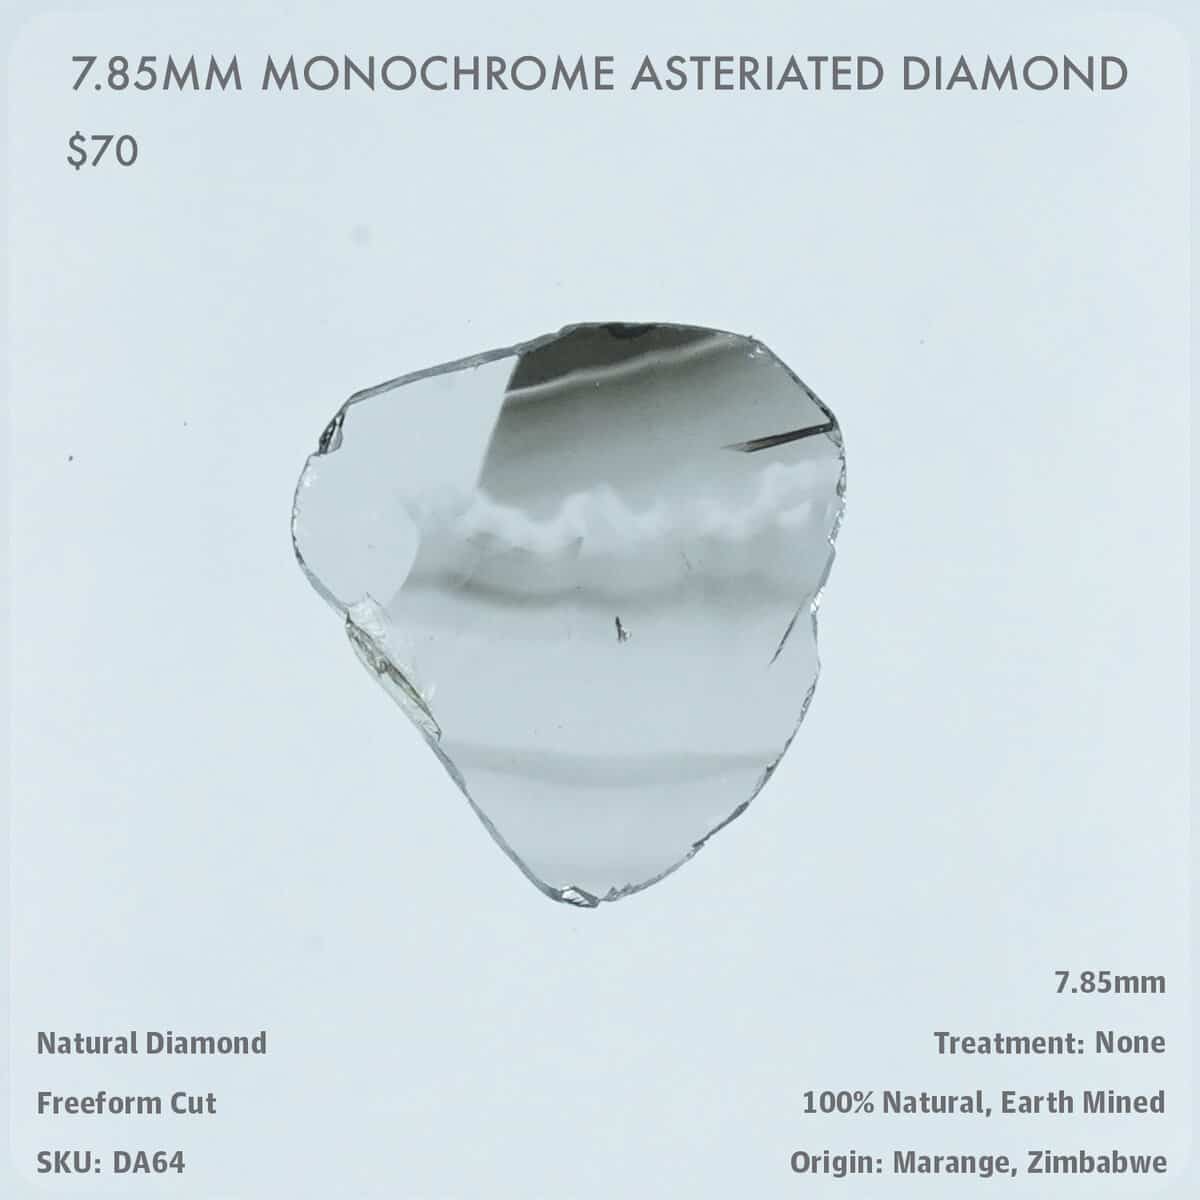 7.85mm Monochrome Asteriated Diamond